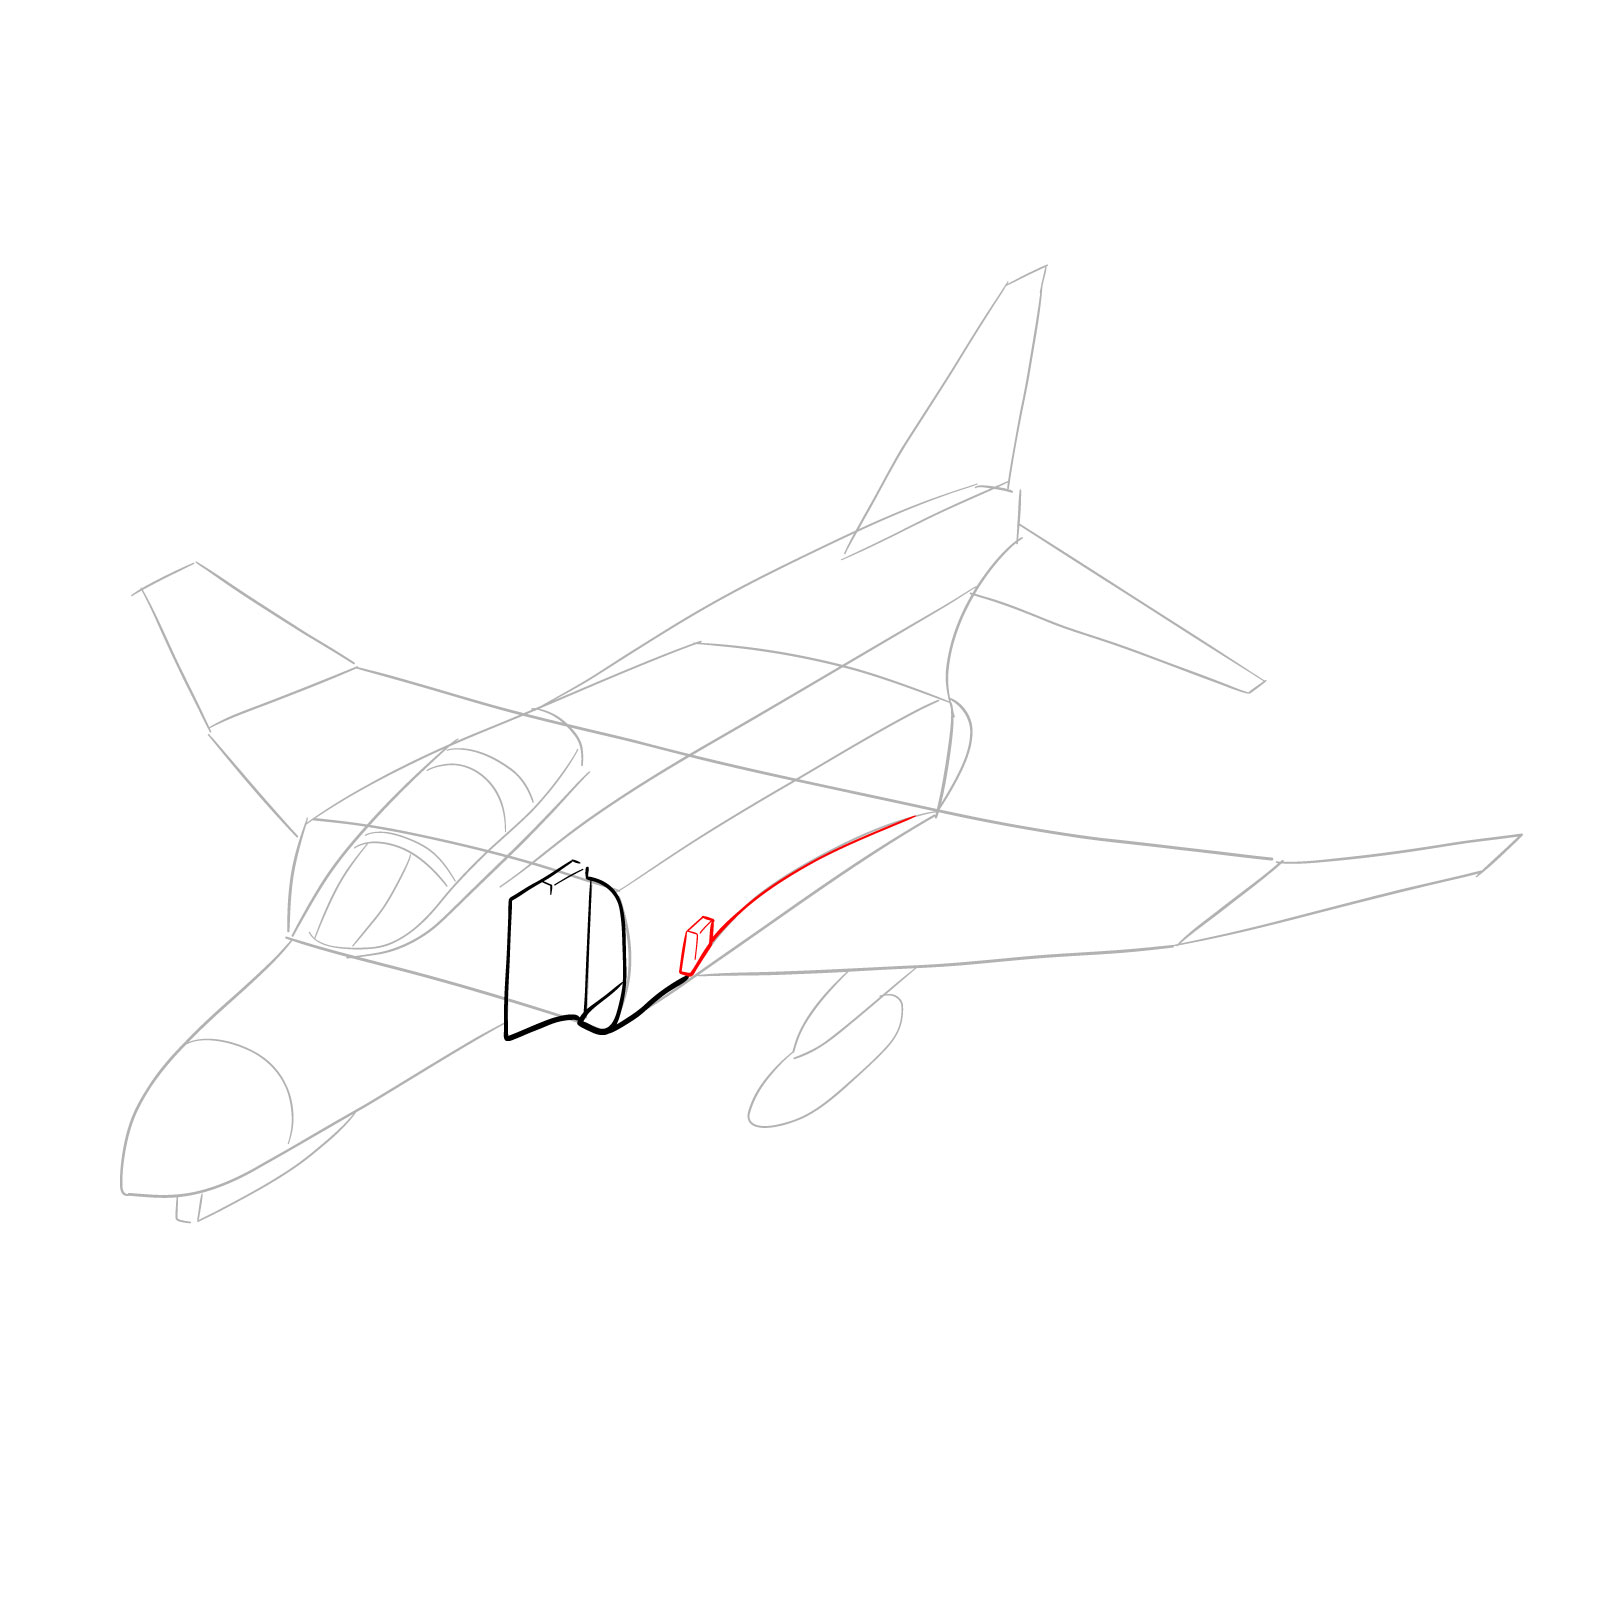 How to draw McDonnell Douglas F-4 Phantom II - step 09